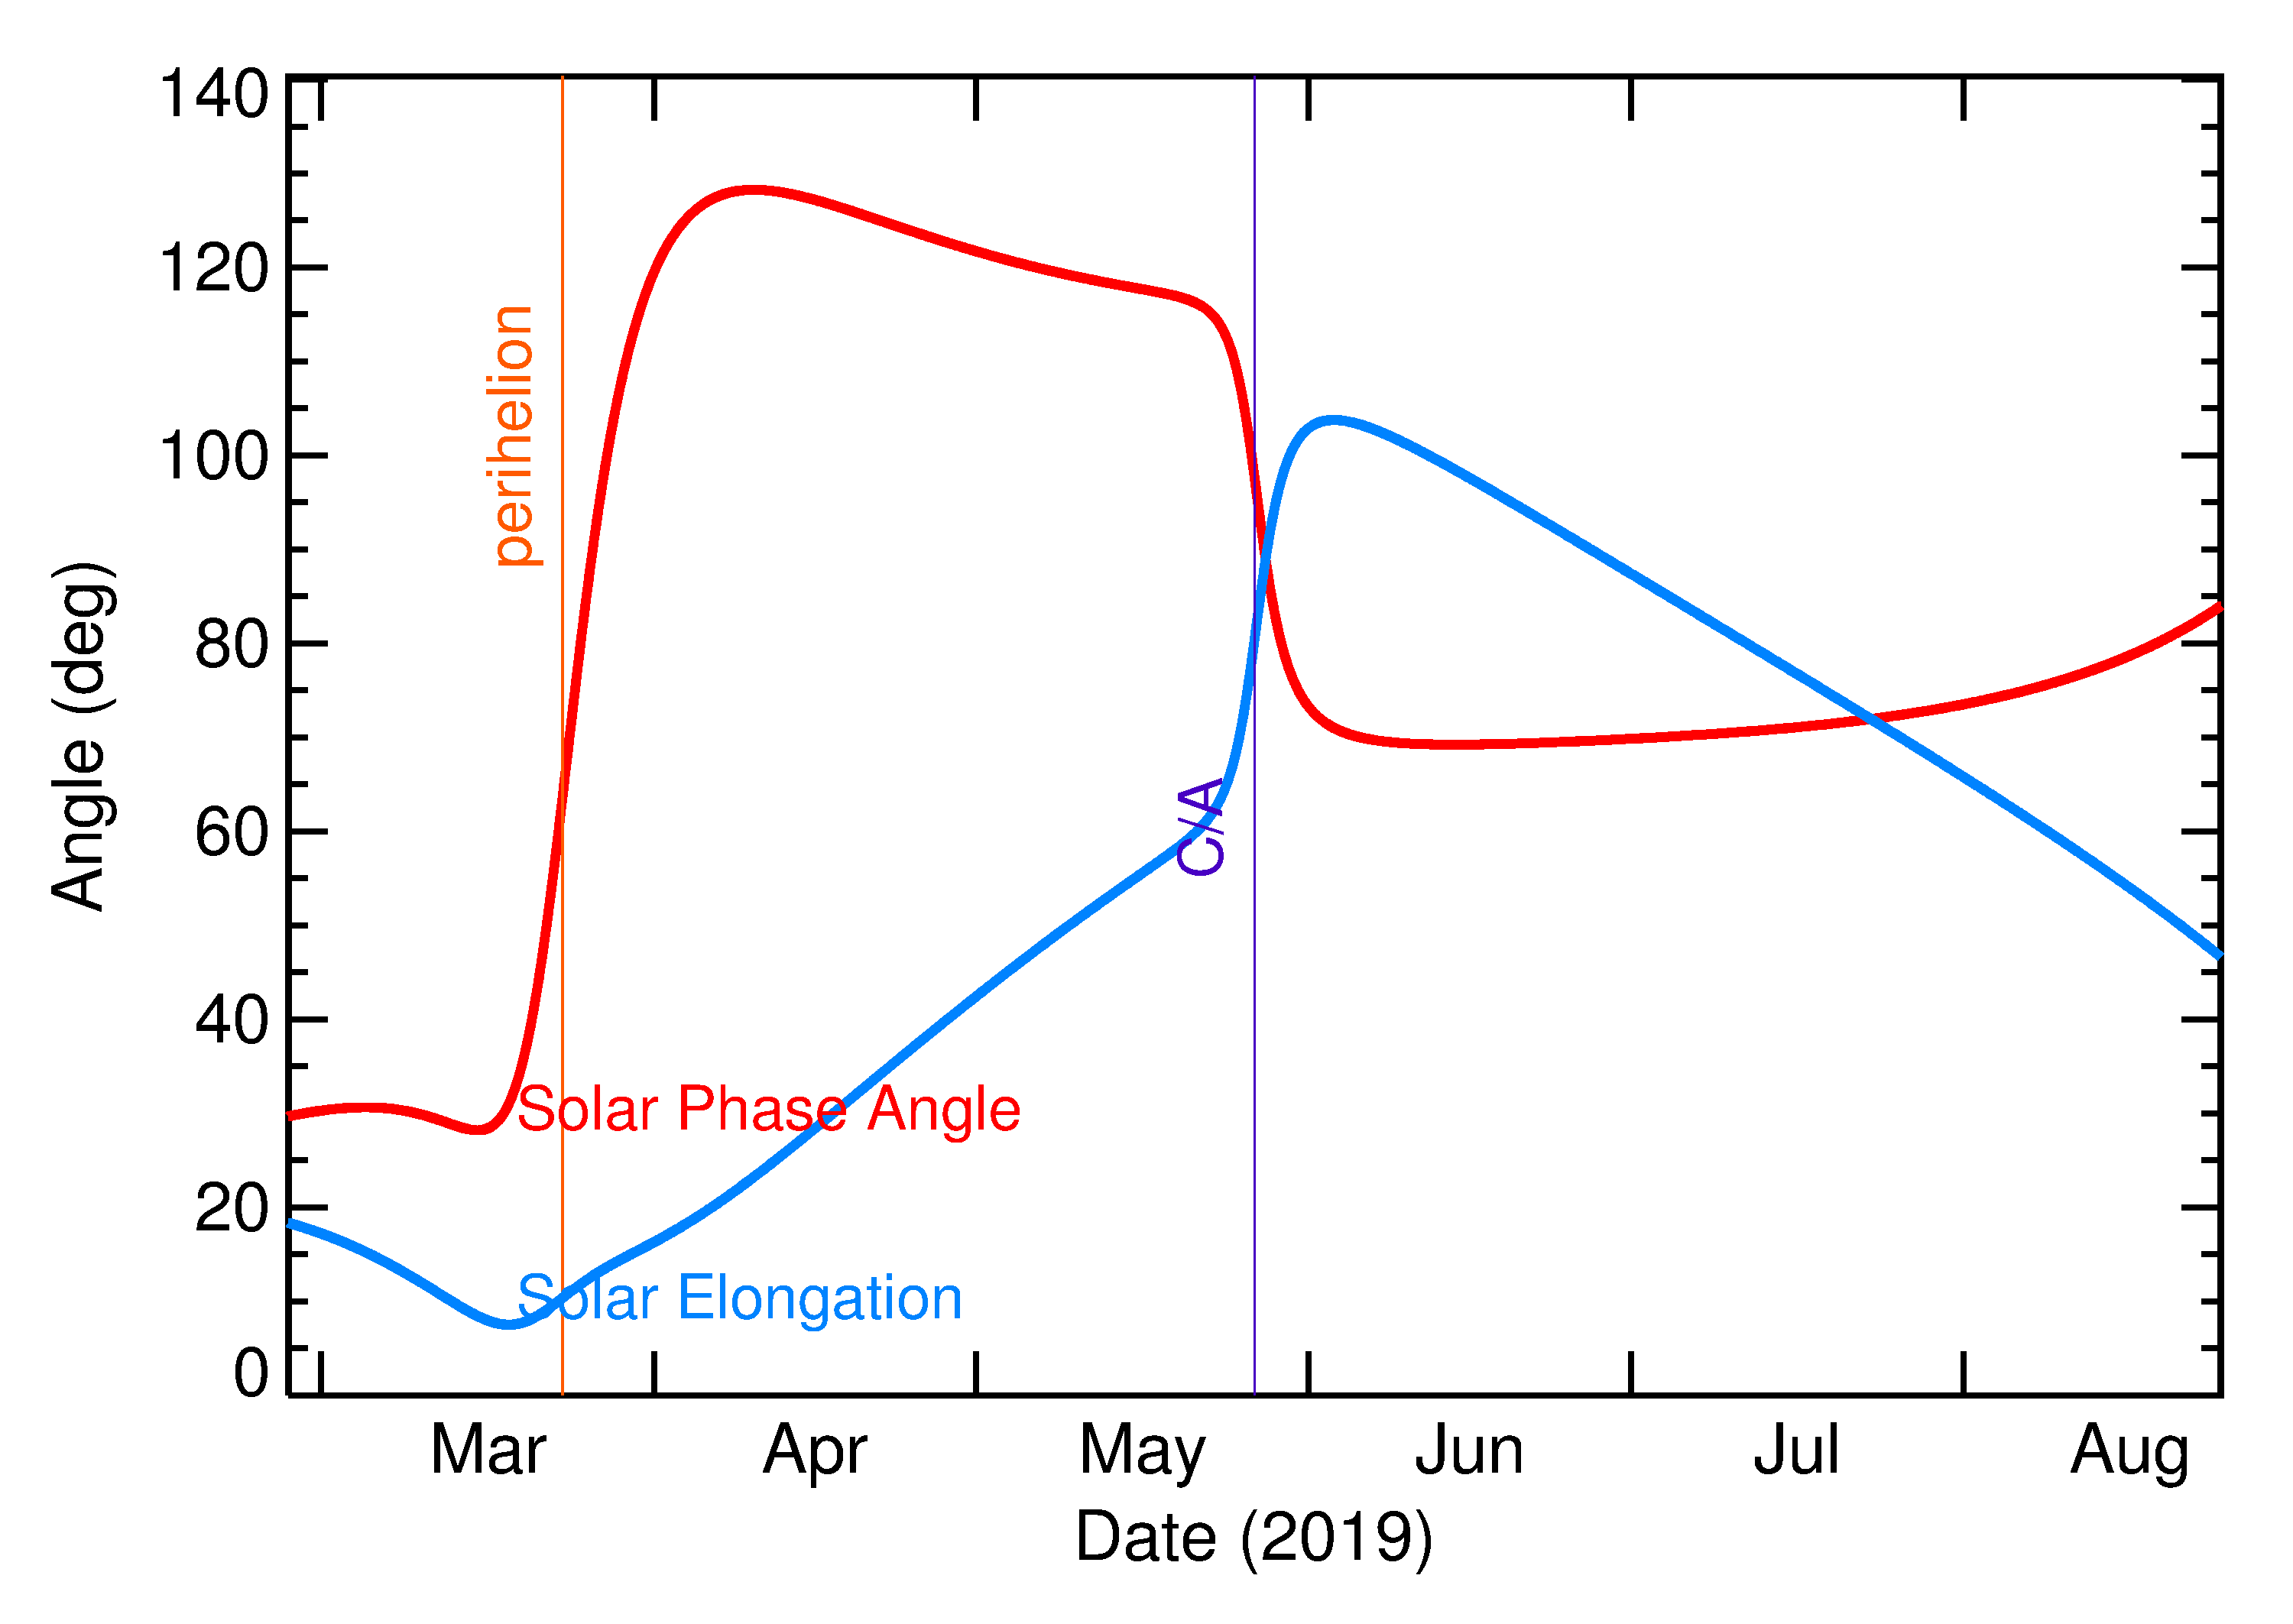 2019 Solar Elongation and Phase Angle